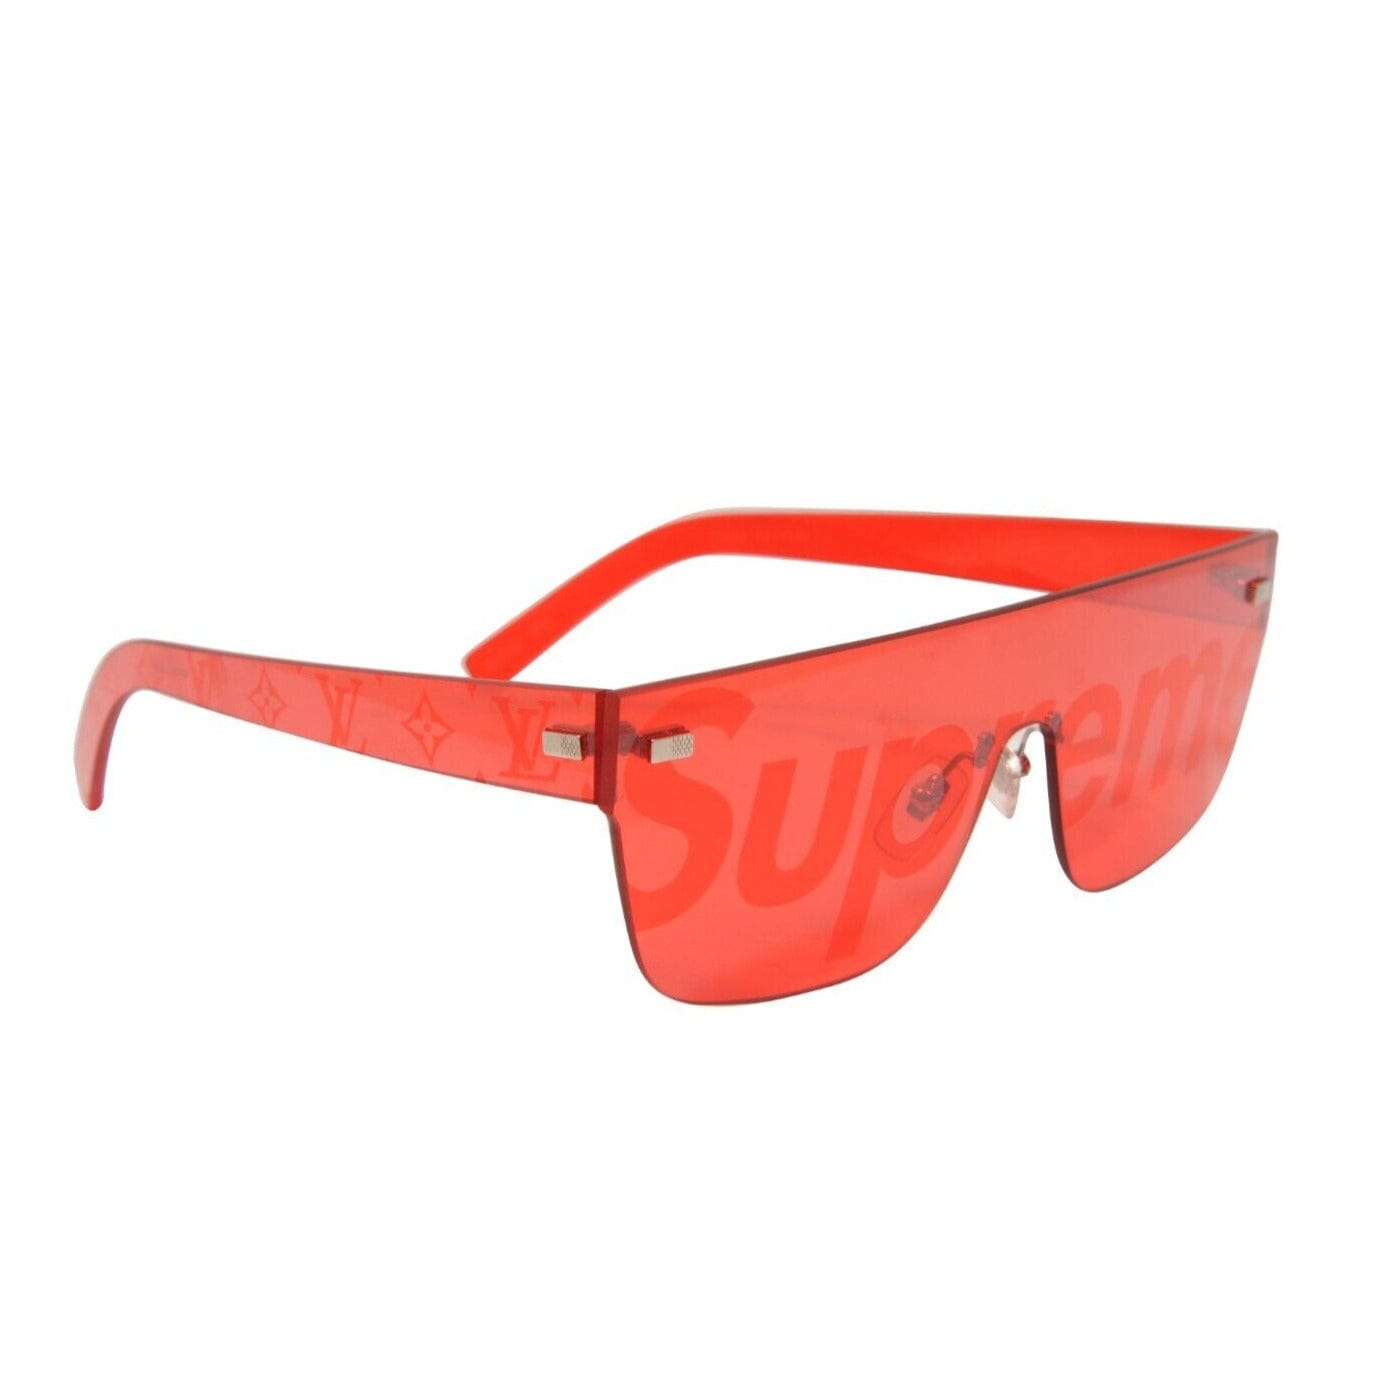 lv air square sunglasses